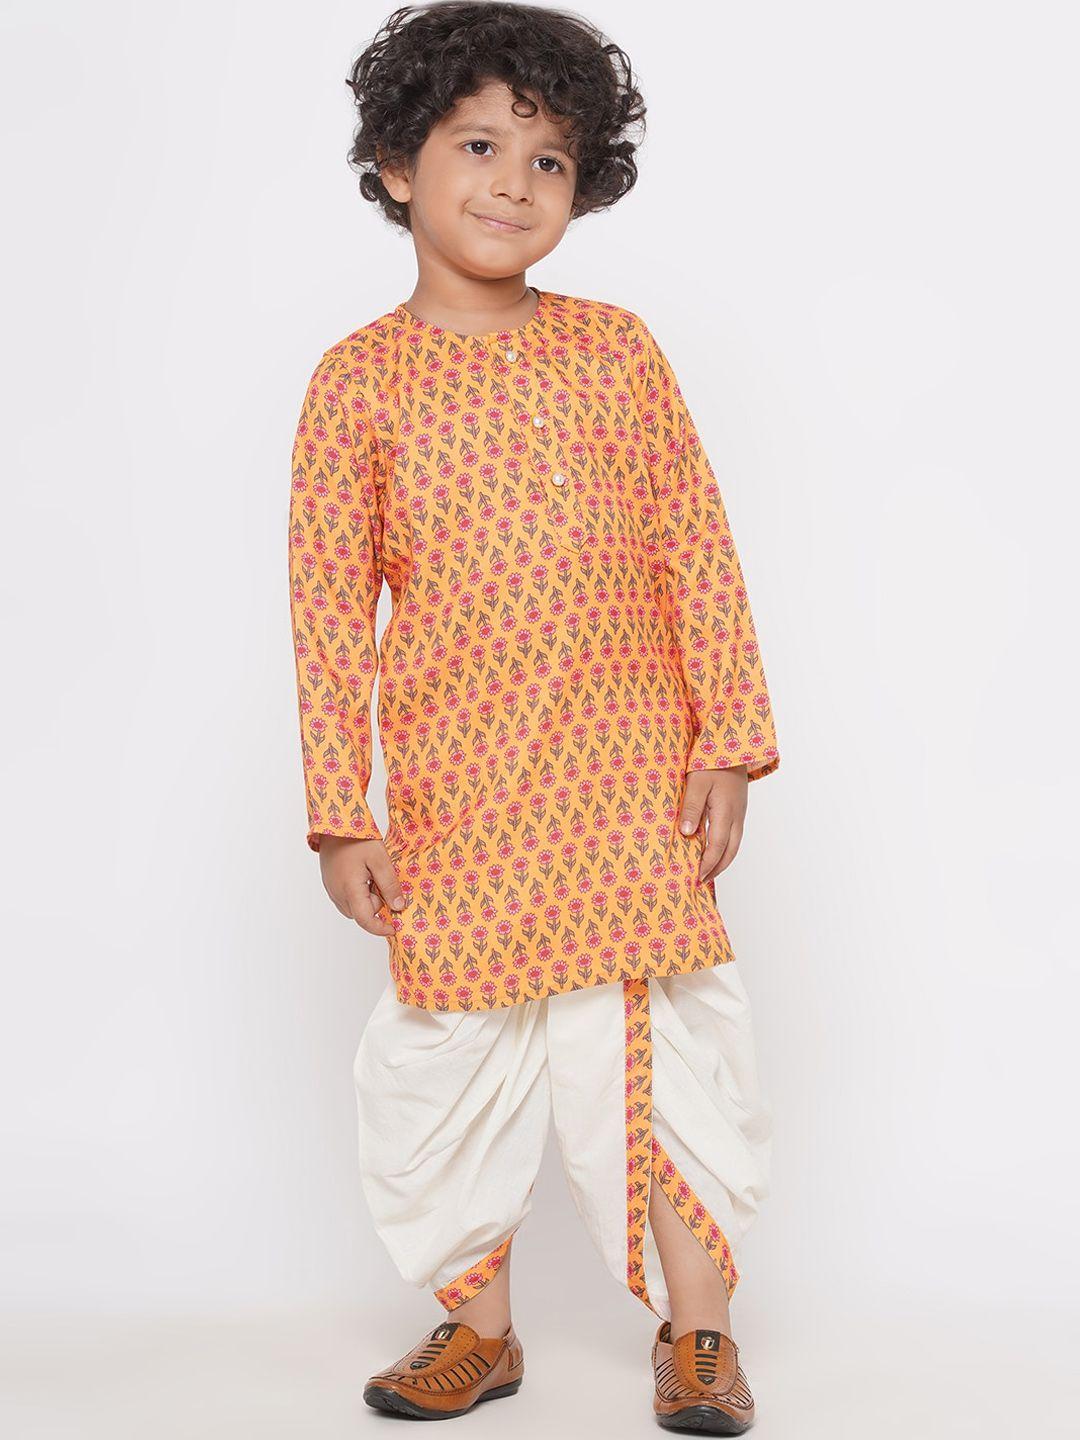 little bansi boys ethnic motifs printed pure cotton kurta with dhoti pants